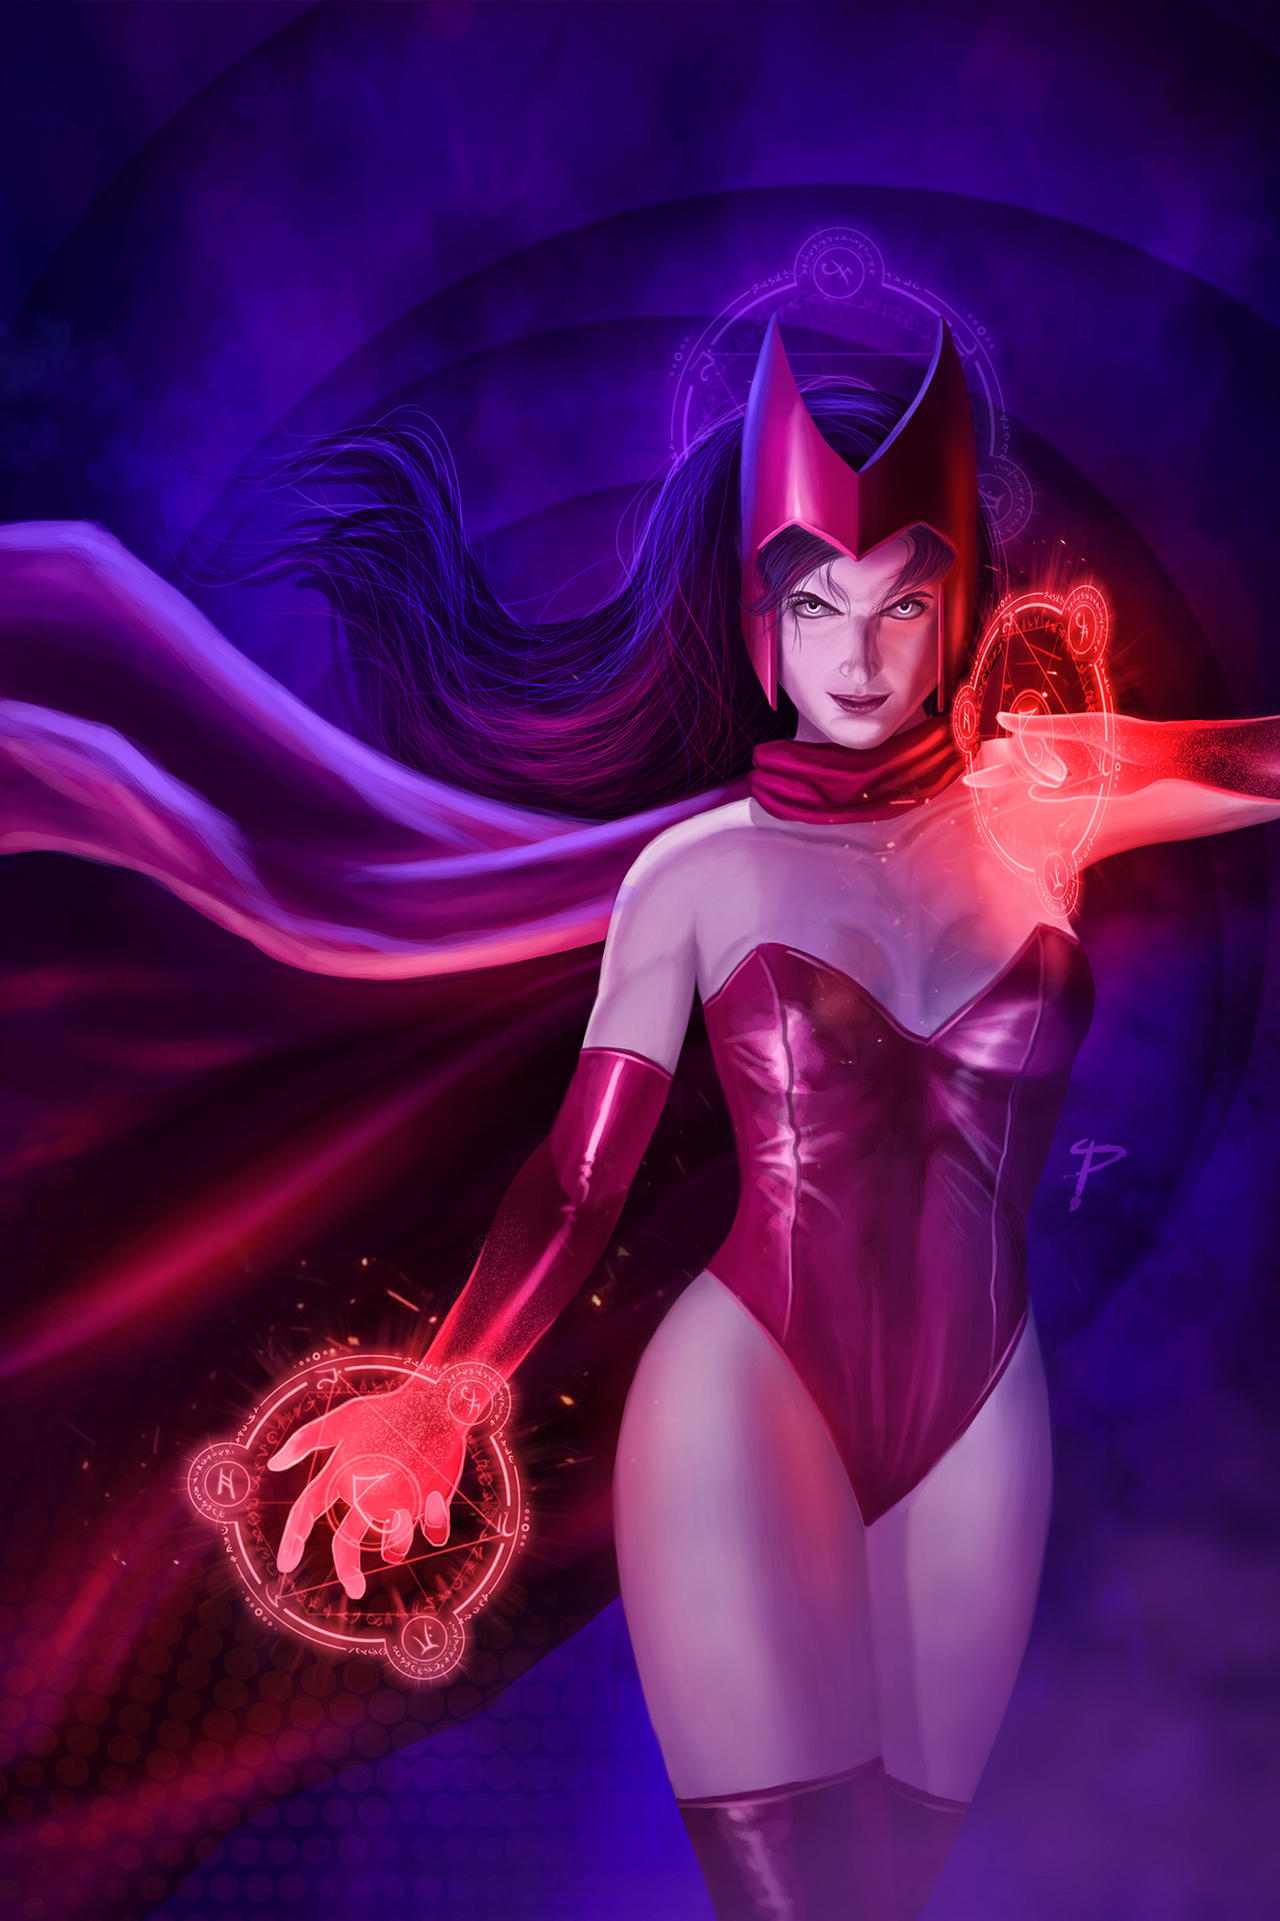 Scarlet Witch (Marvel) Render by Ssundpool on DeviantArt